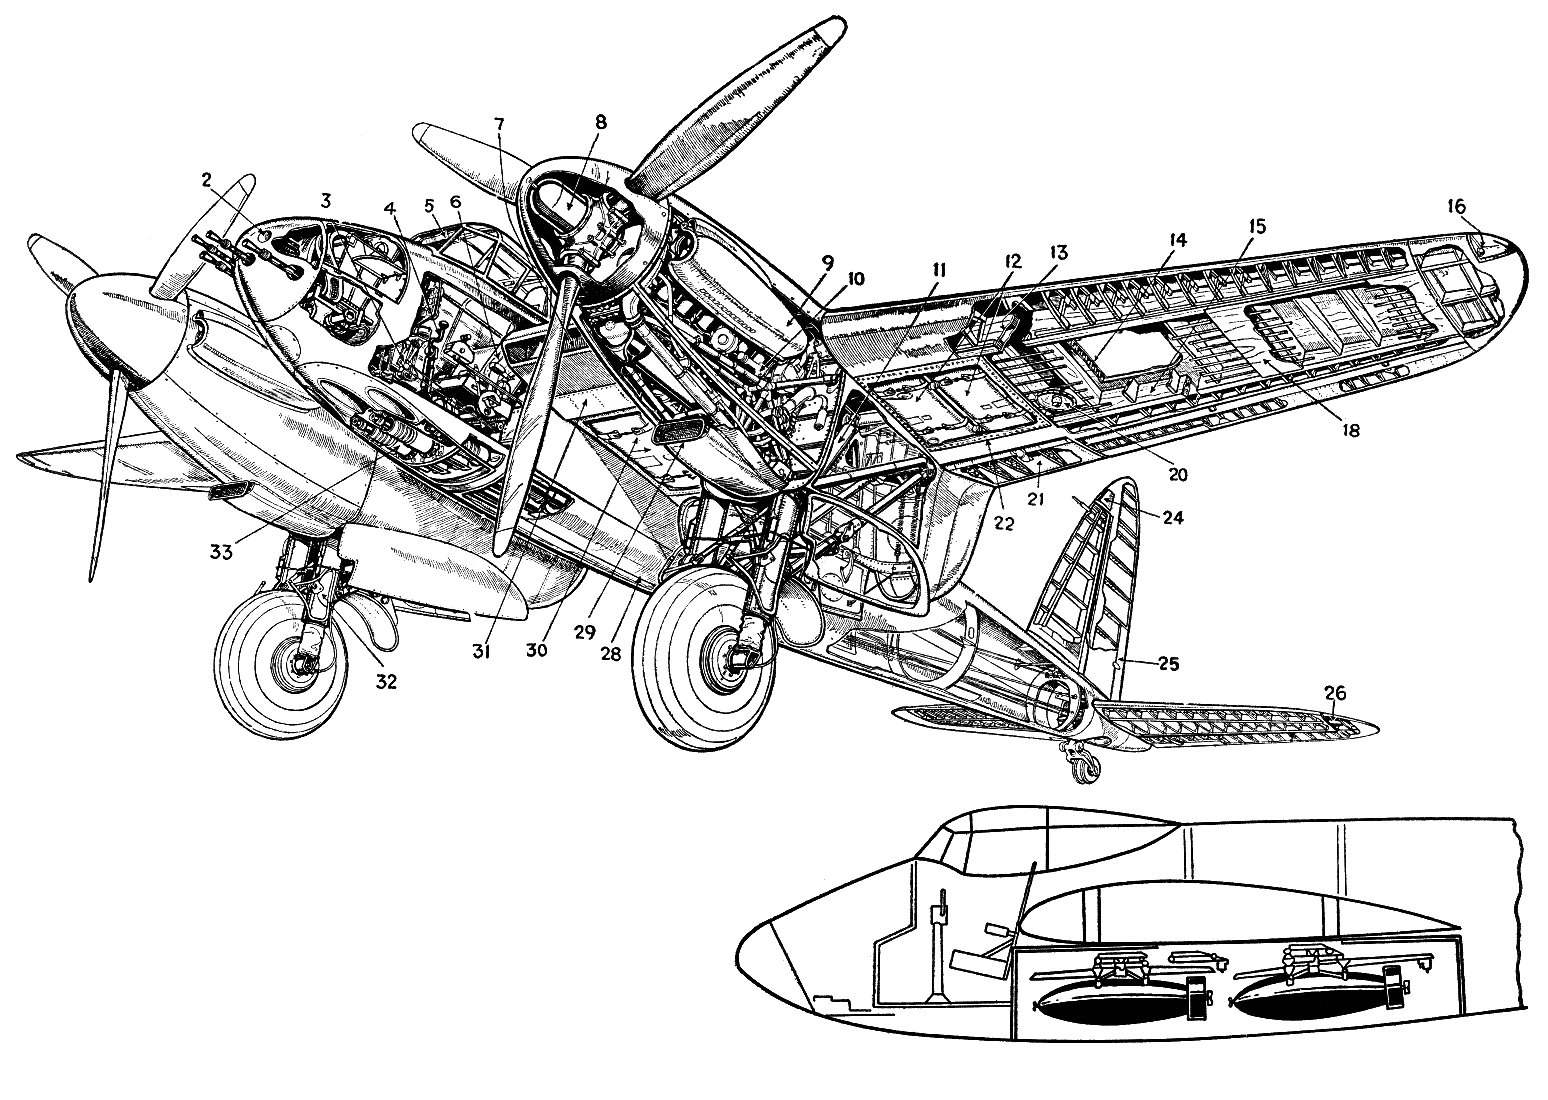 de Havilland Mosquito cutaway